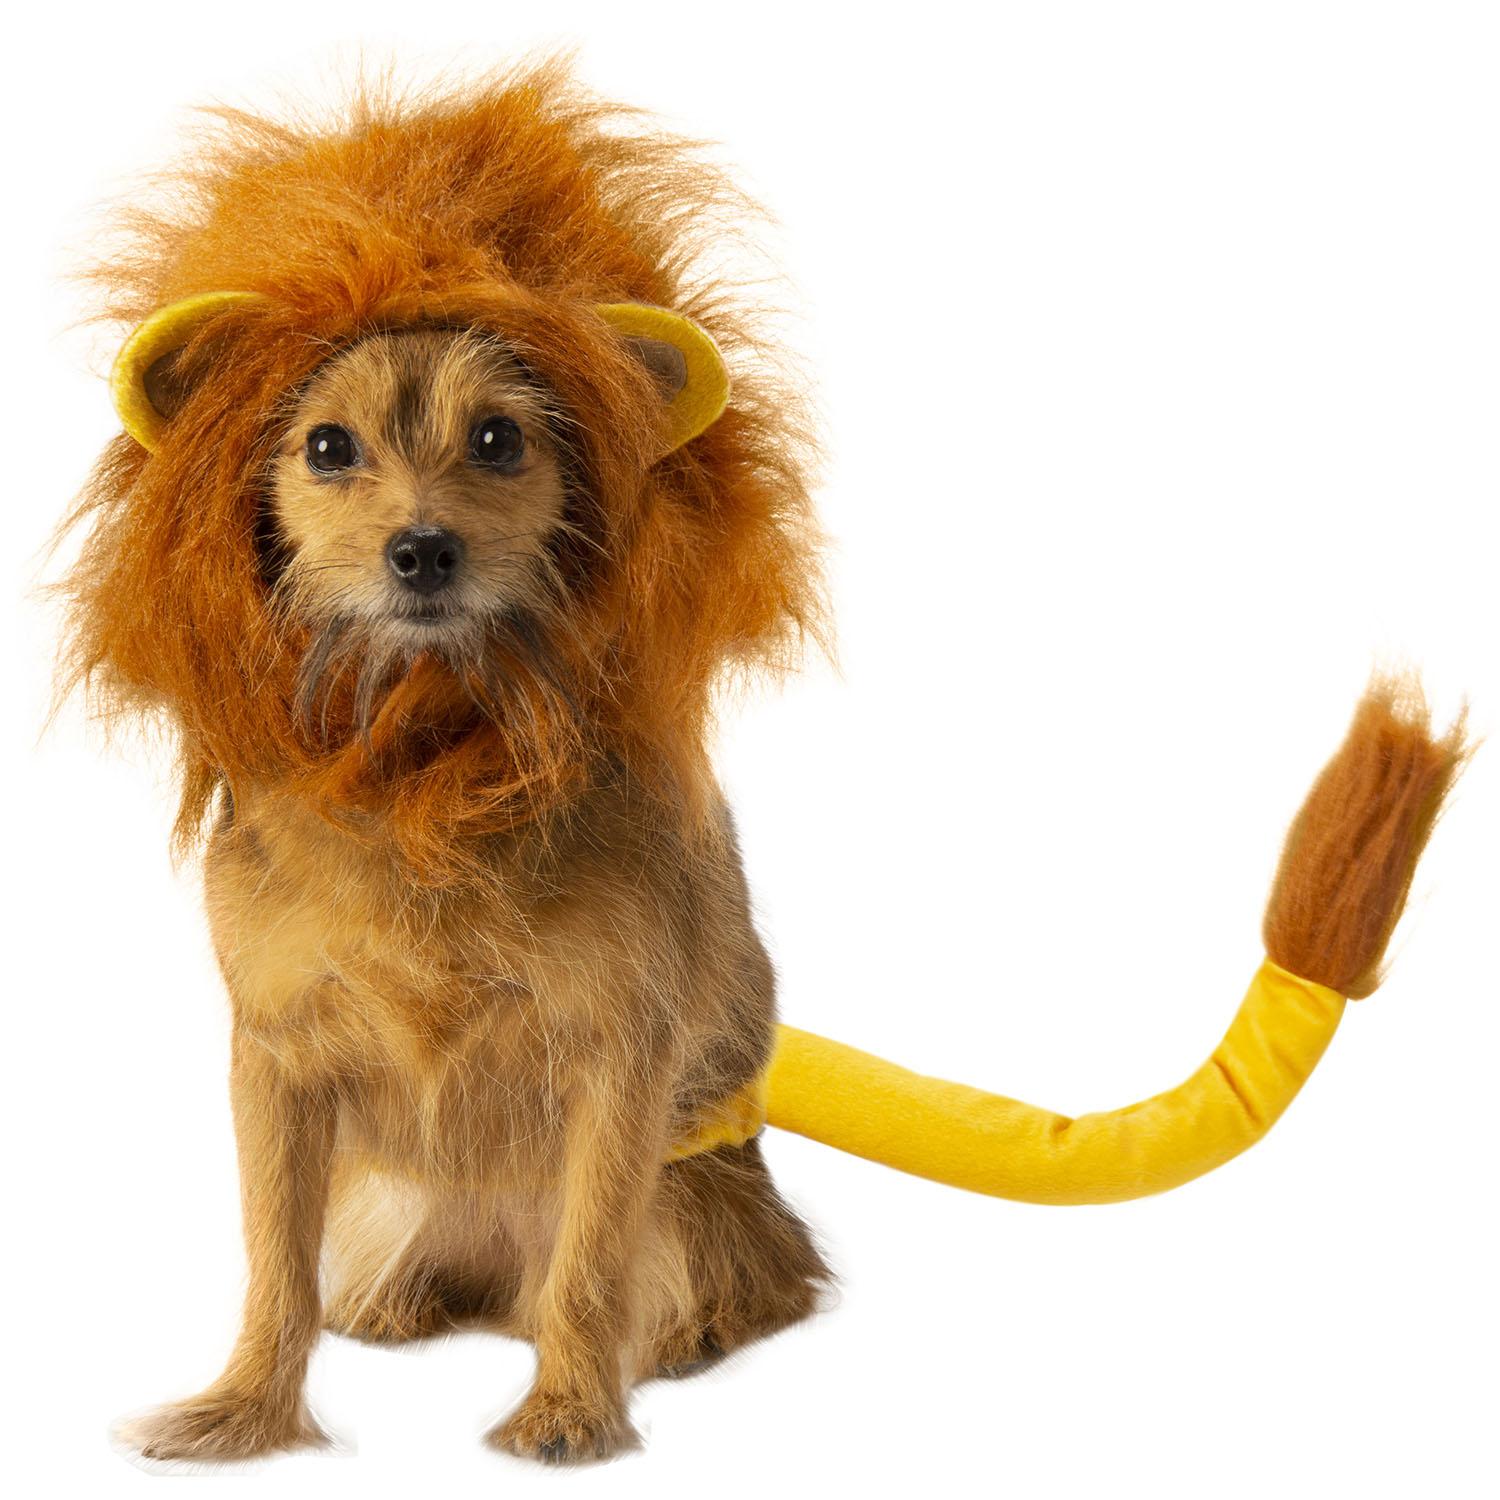 The Lion King Simba Dog Costume Accessory Set